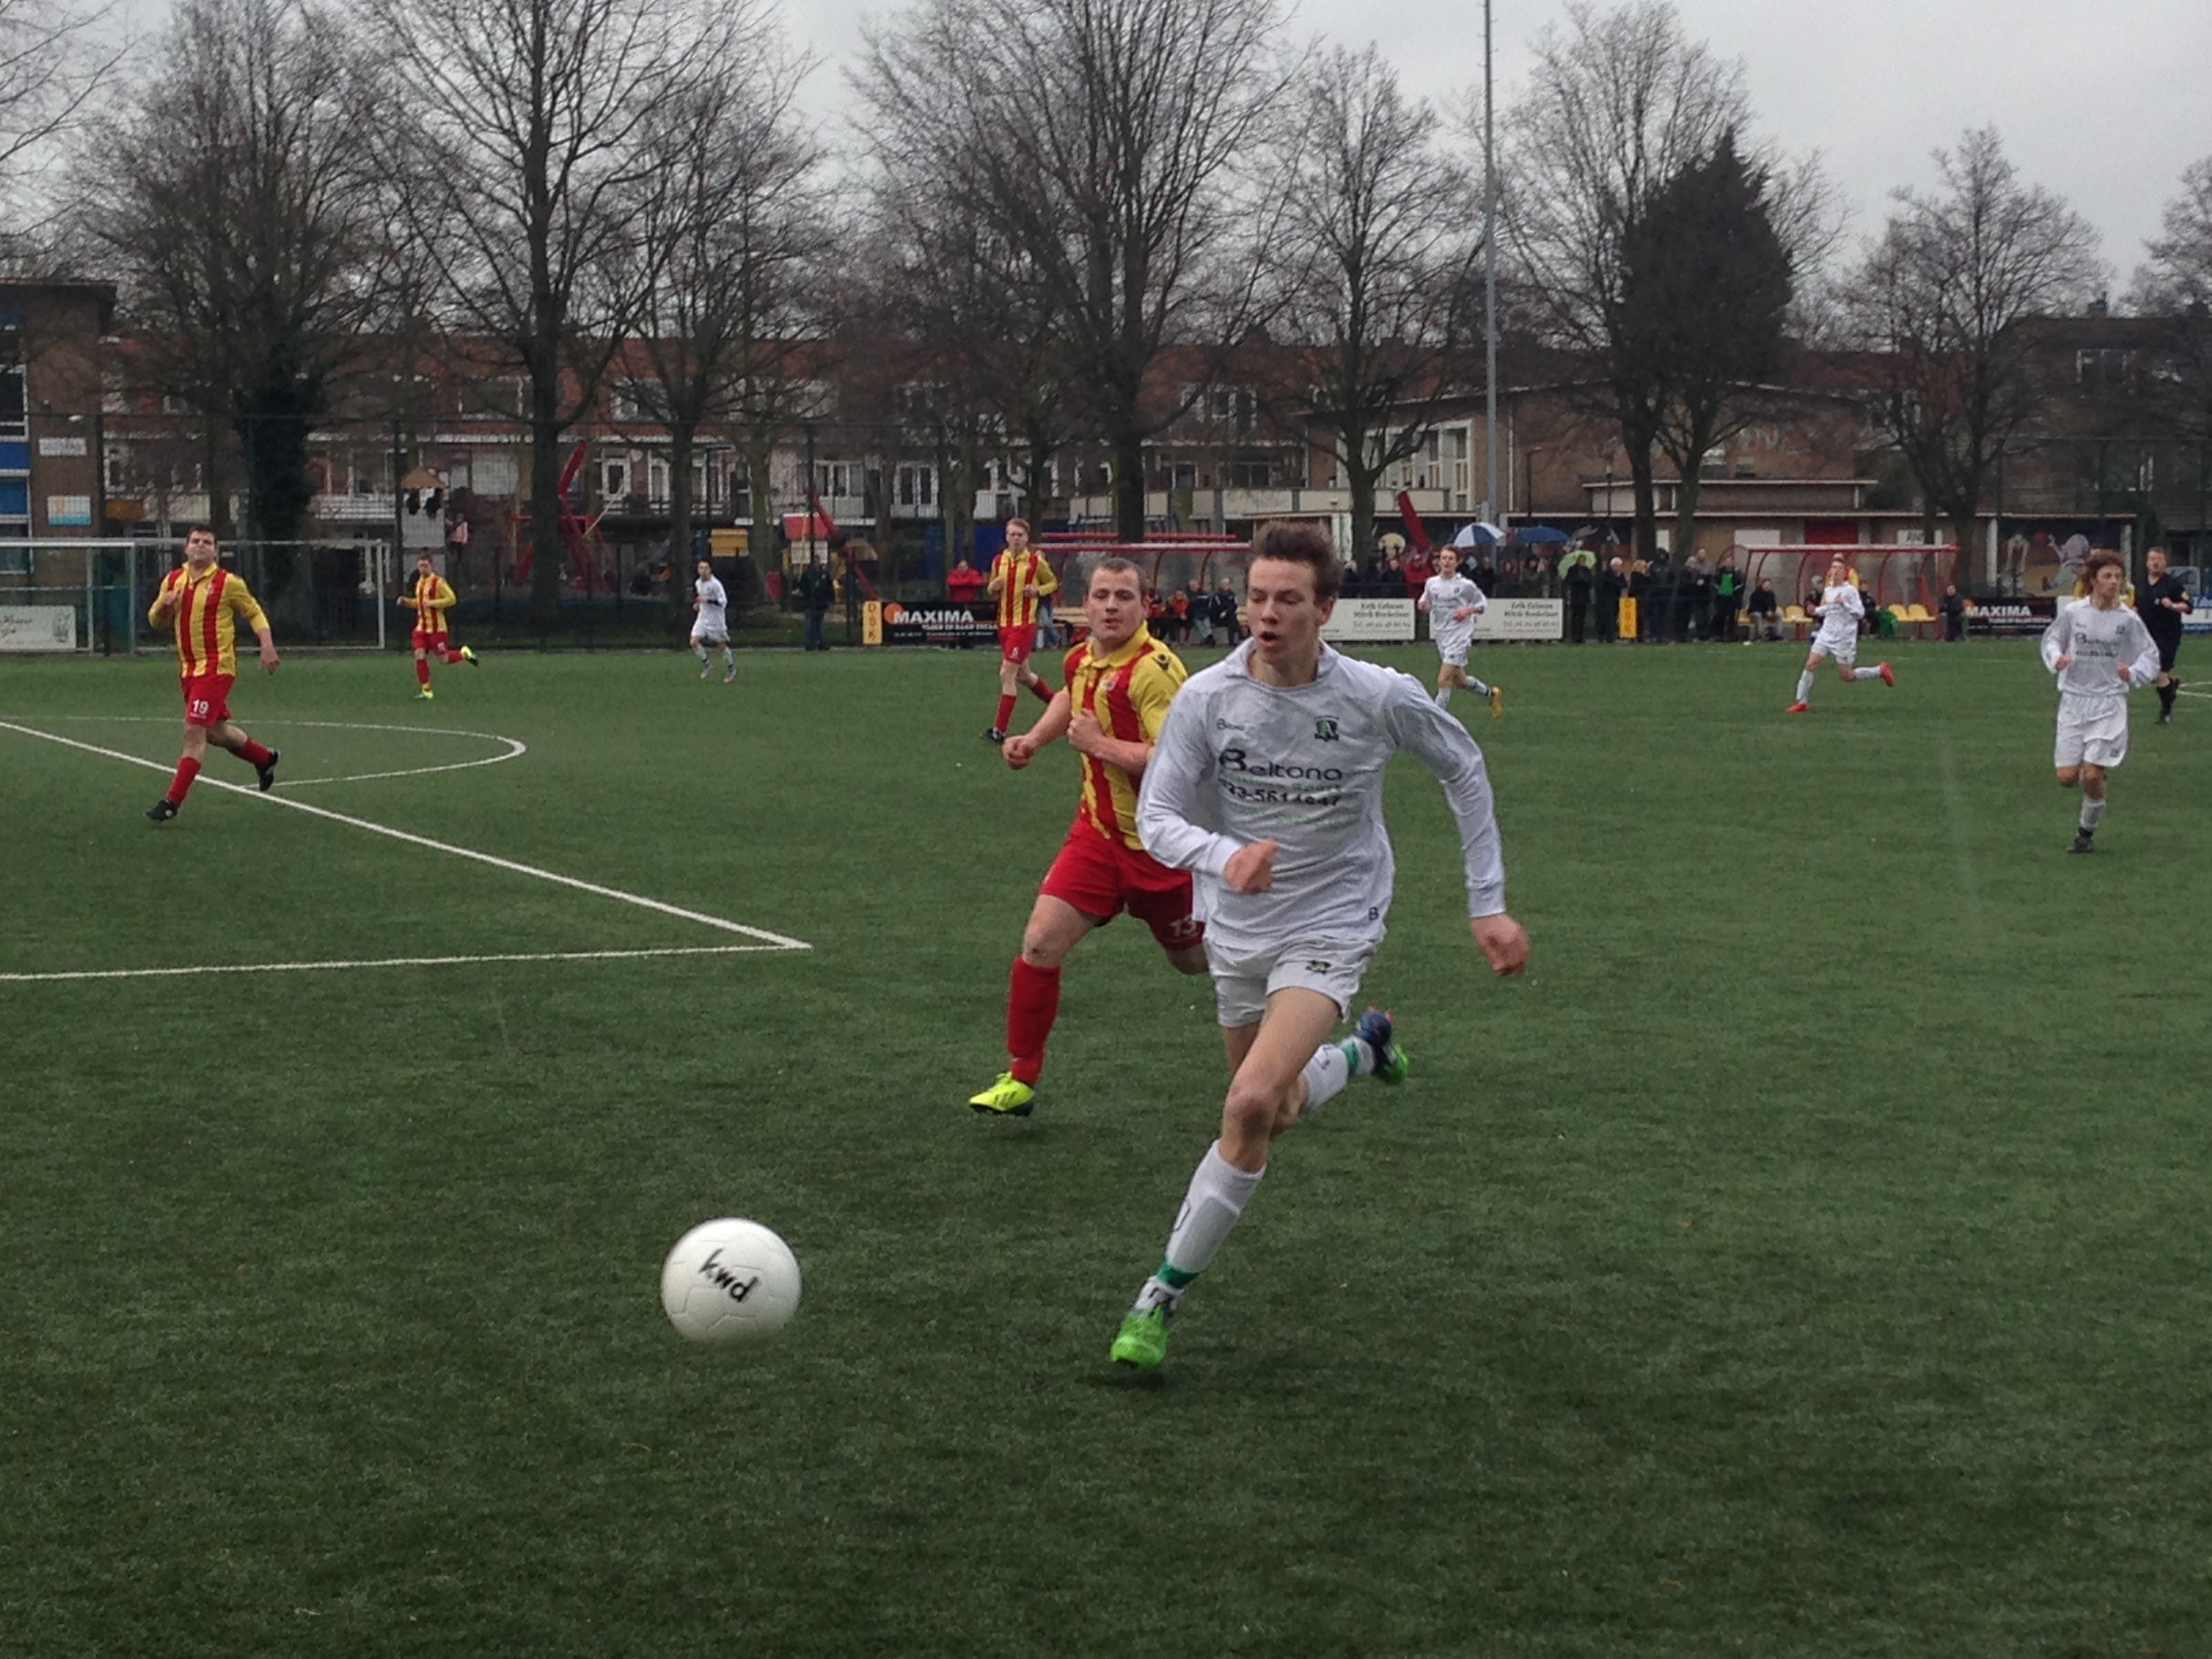 DSK - Alliance - Voetbal in Haarlem